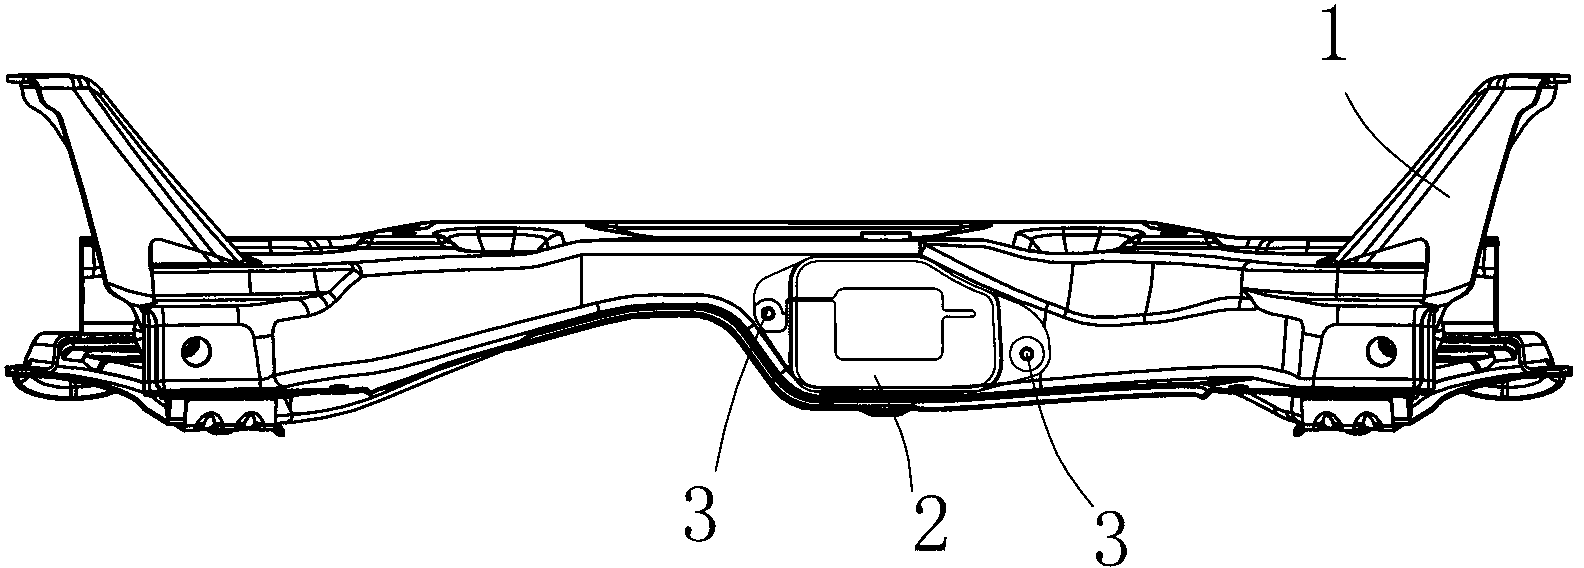 Automobile sub-frame with rear suspension splash guard